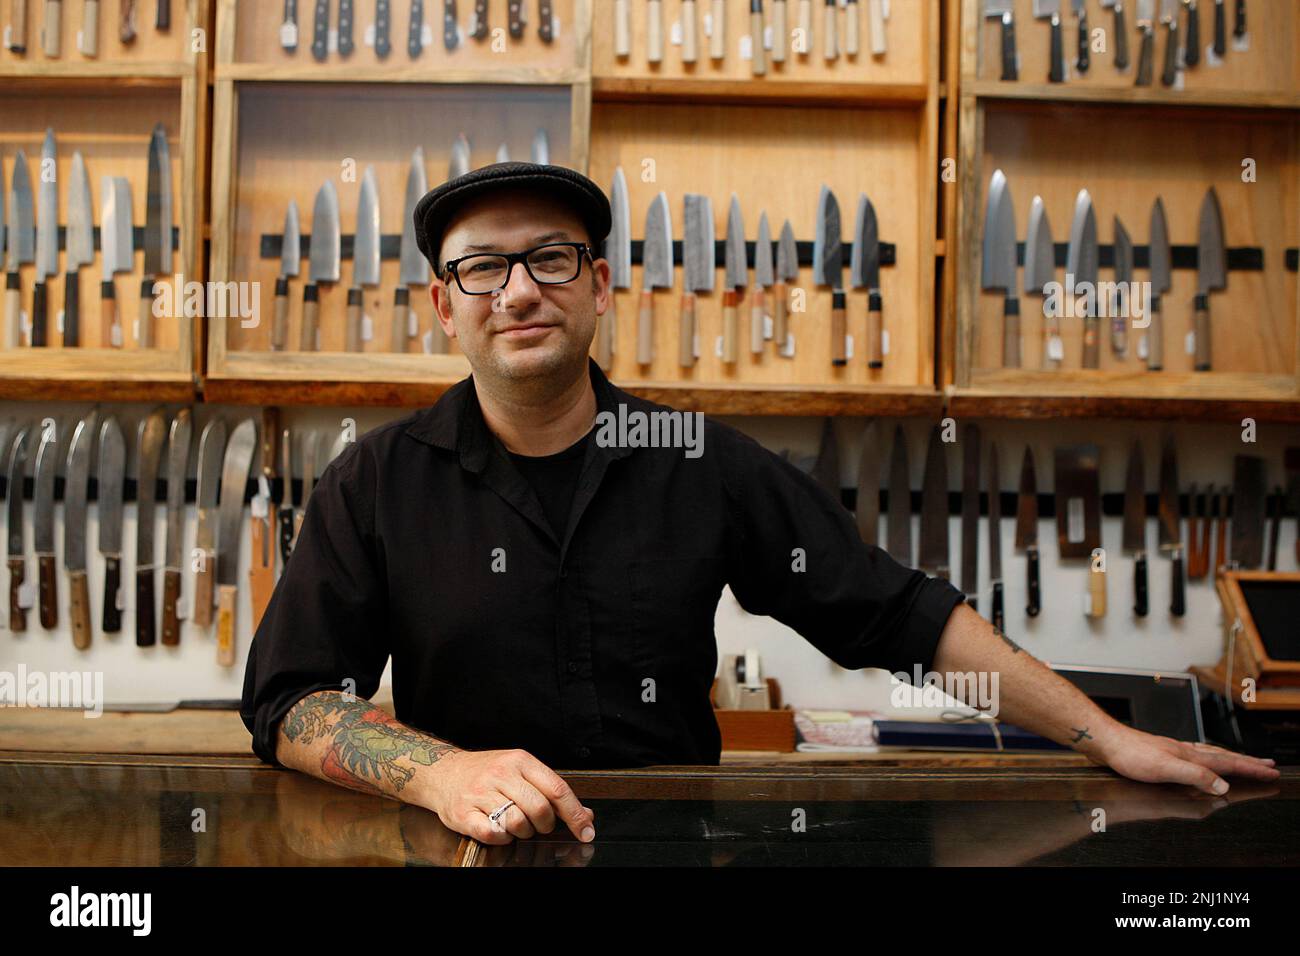 https://c8.alamy.com/comp/2NJ1NY4/cutler-josh-donald-shows-his-knives-at-bernal-cutlery-in-san-francisco-calif-on-tuesday-september-23-2014-liz-hafaliasan-francisco-chronicle-via-ap-2NJ1NY4.jpg